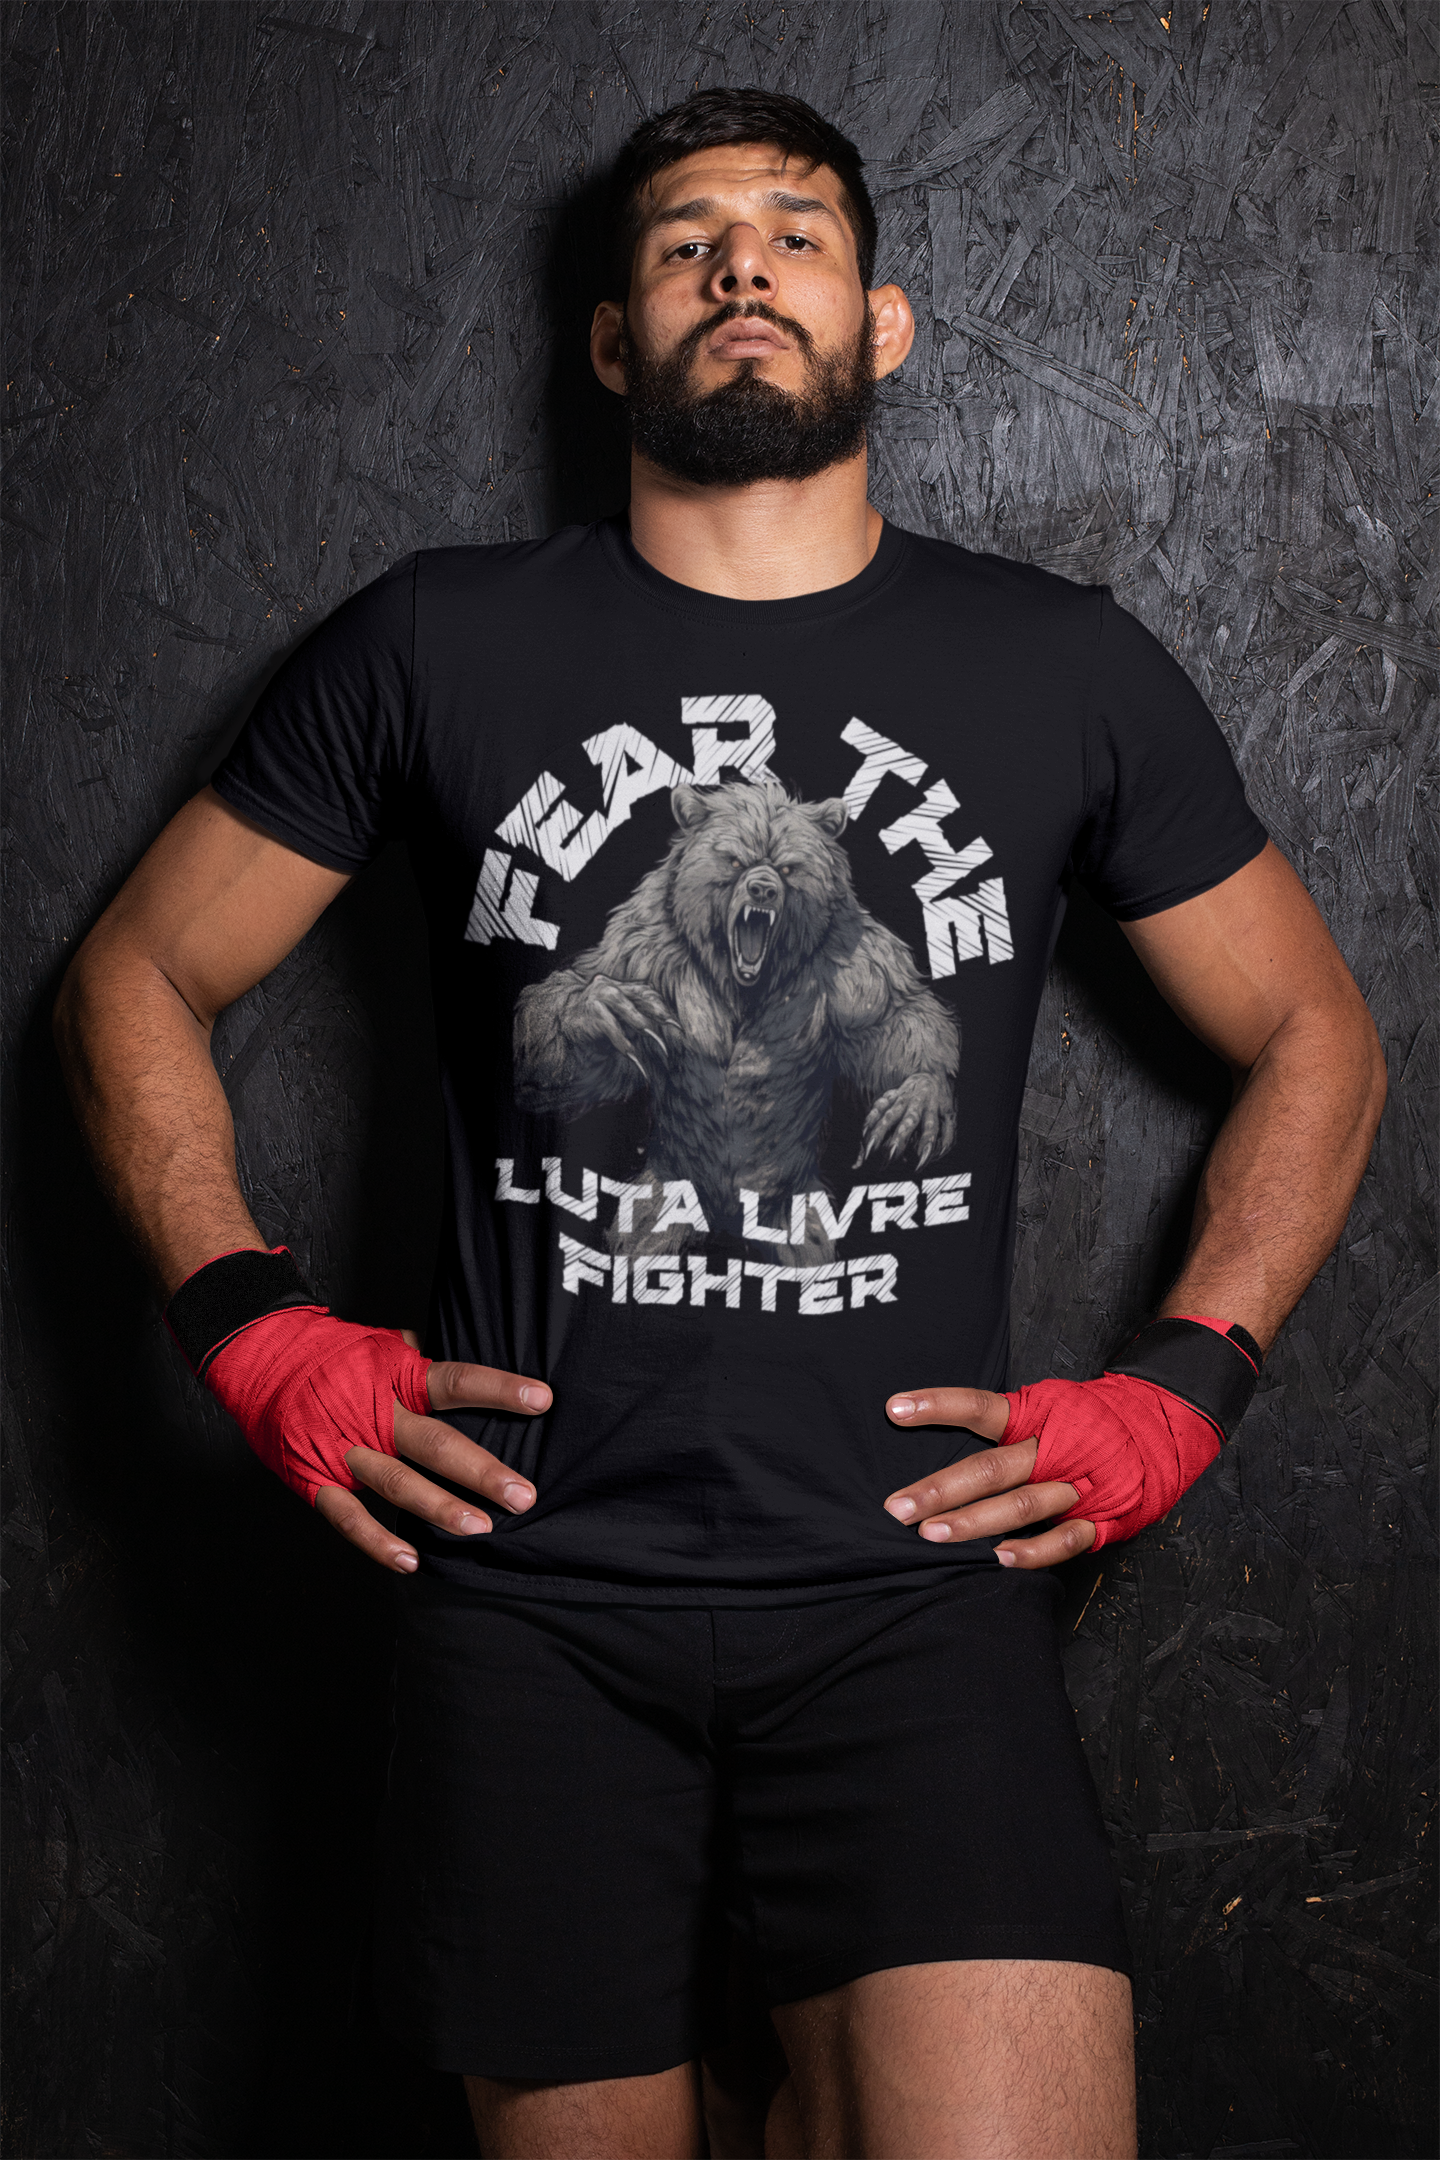 Awesome Brazilian Martial Arts Luta Livre Freestyle Fighter Premium T-Shirt